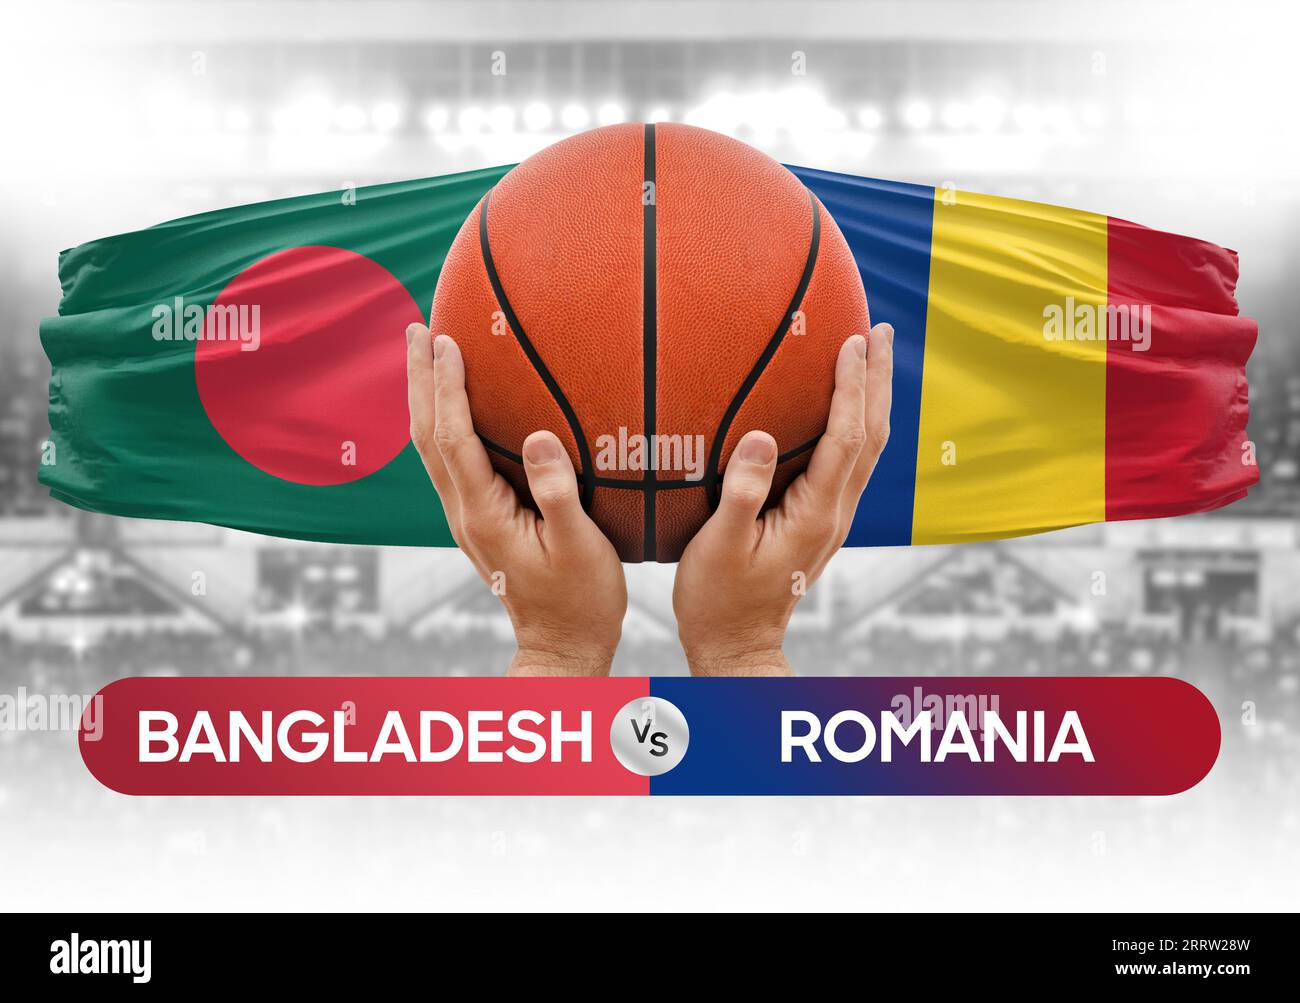 Bangladesch gegen Rumänien Basketball-Nationalmannschaften Basketballspiel Wettbewerb Cup Konzept Bild Stockfoto